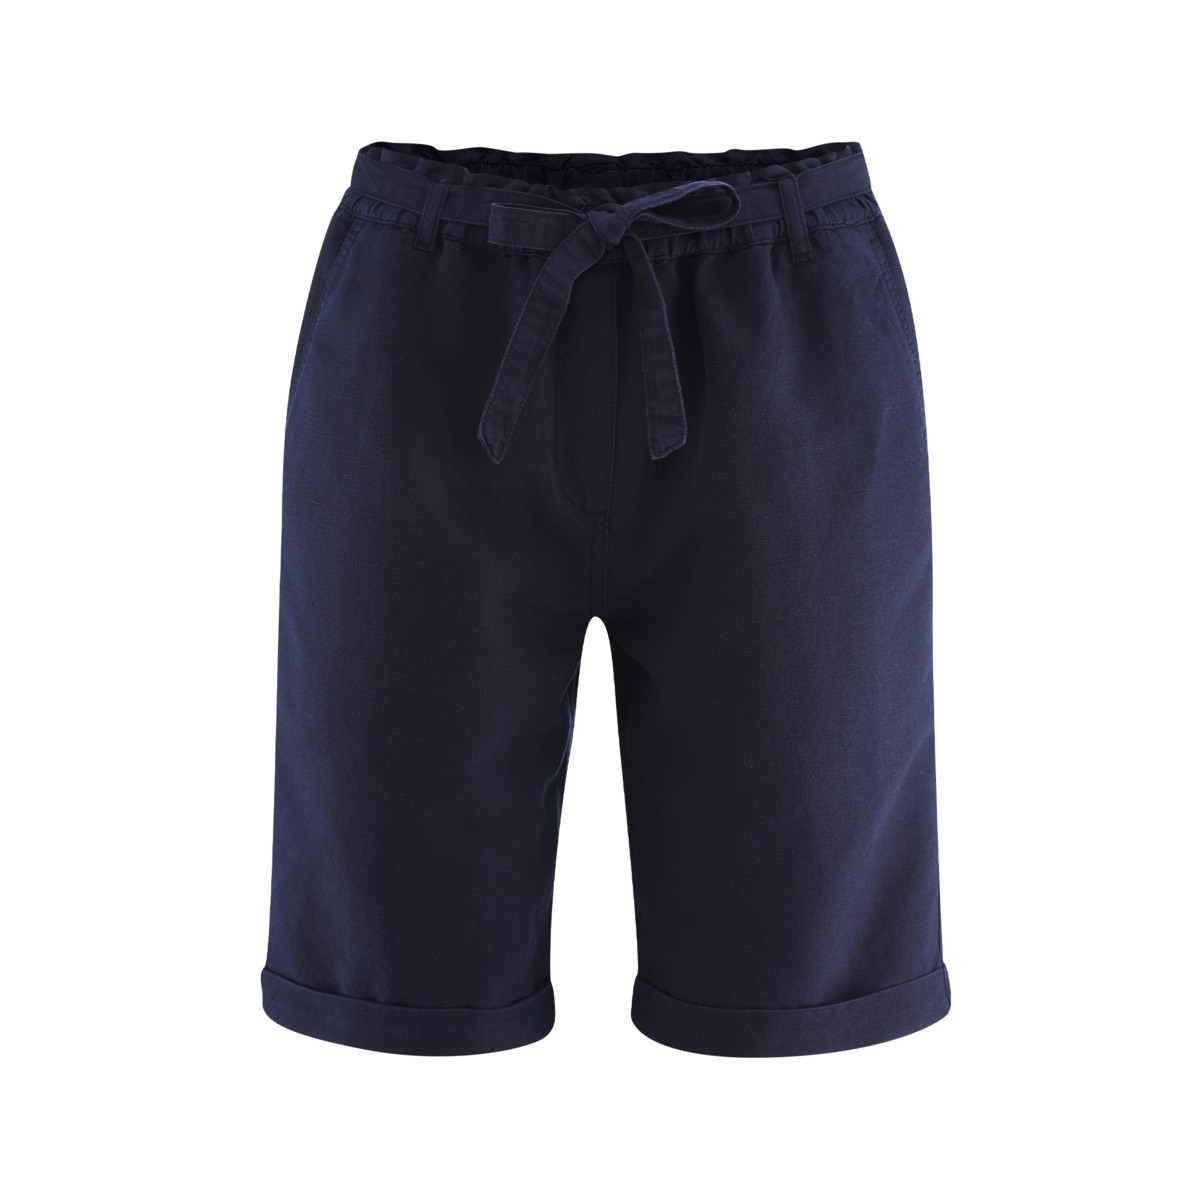 Blue Bermuda shorts, GABY